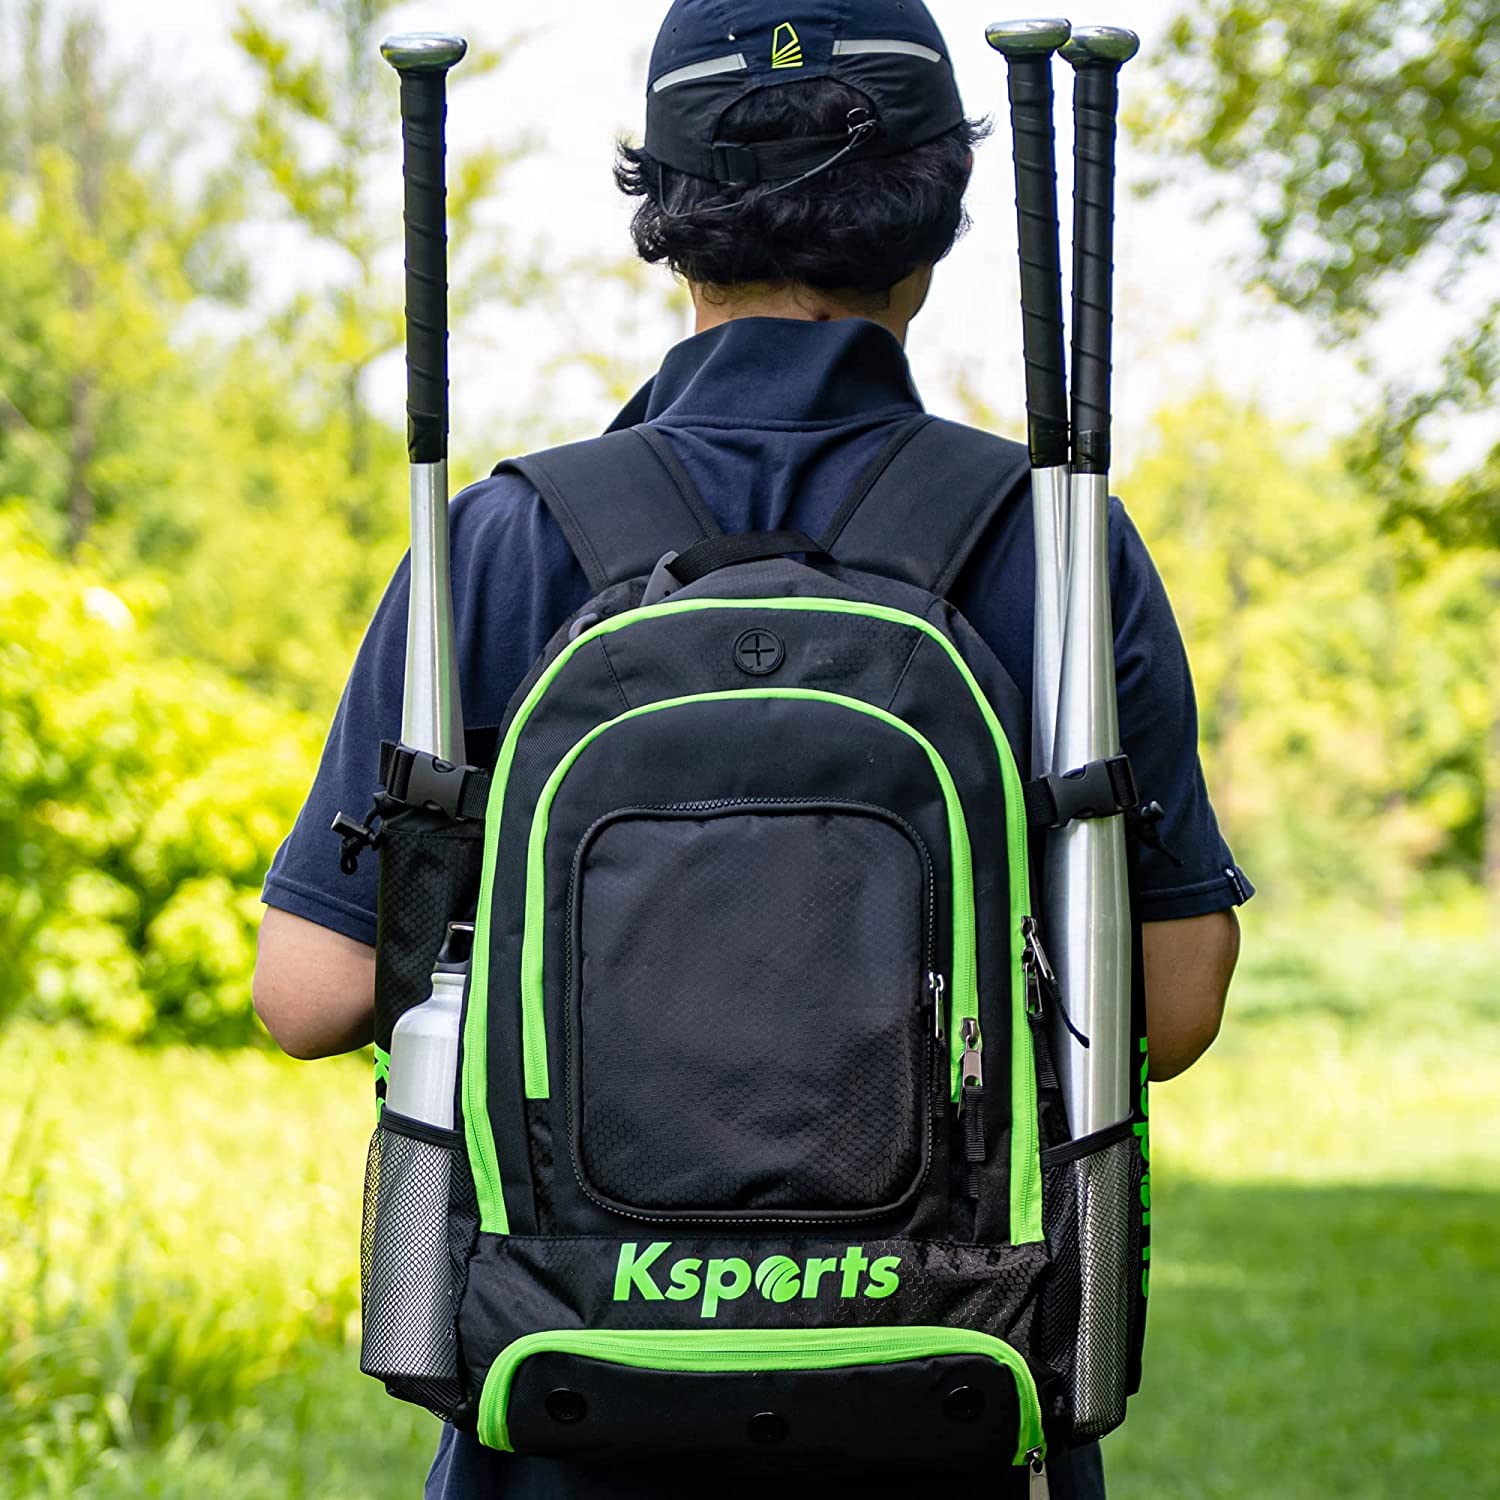 Ksports Baseball Backpack Black with Green Zipper (KSU6003)